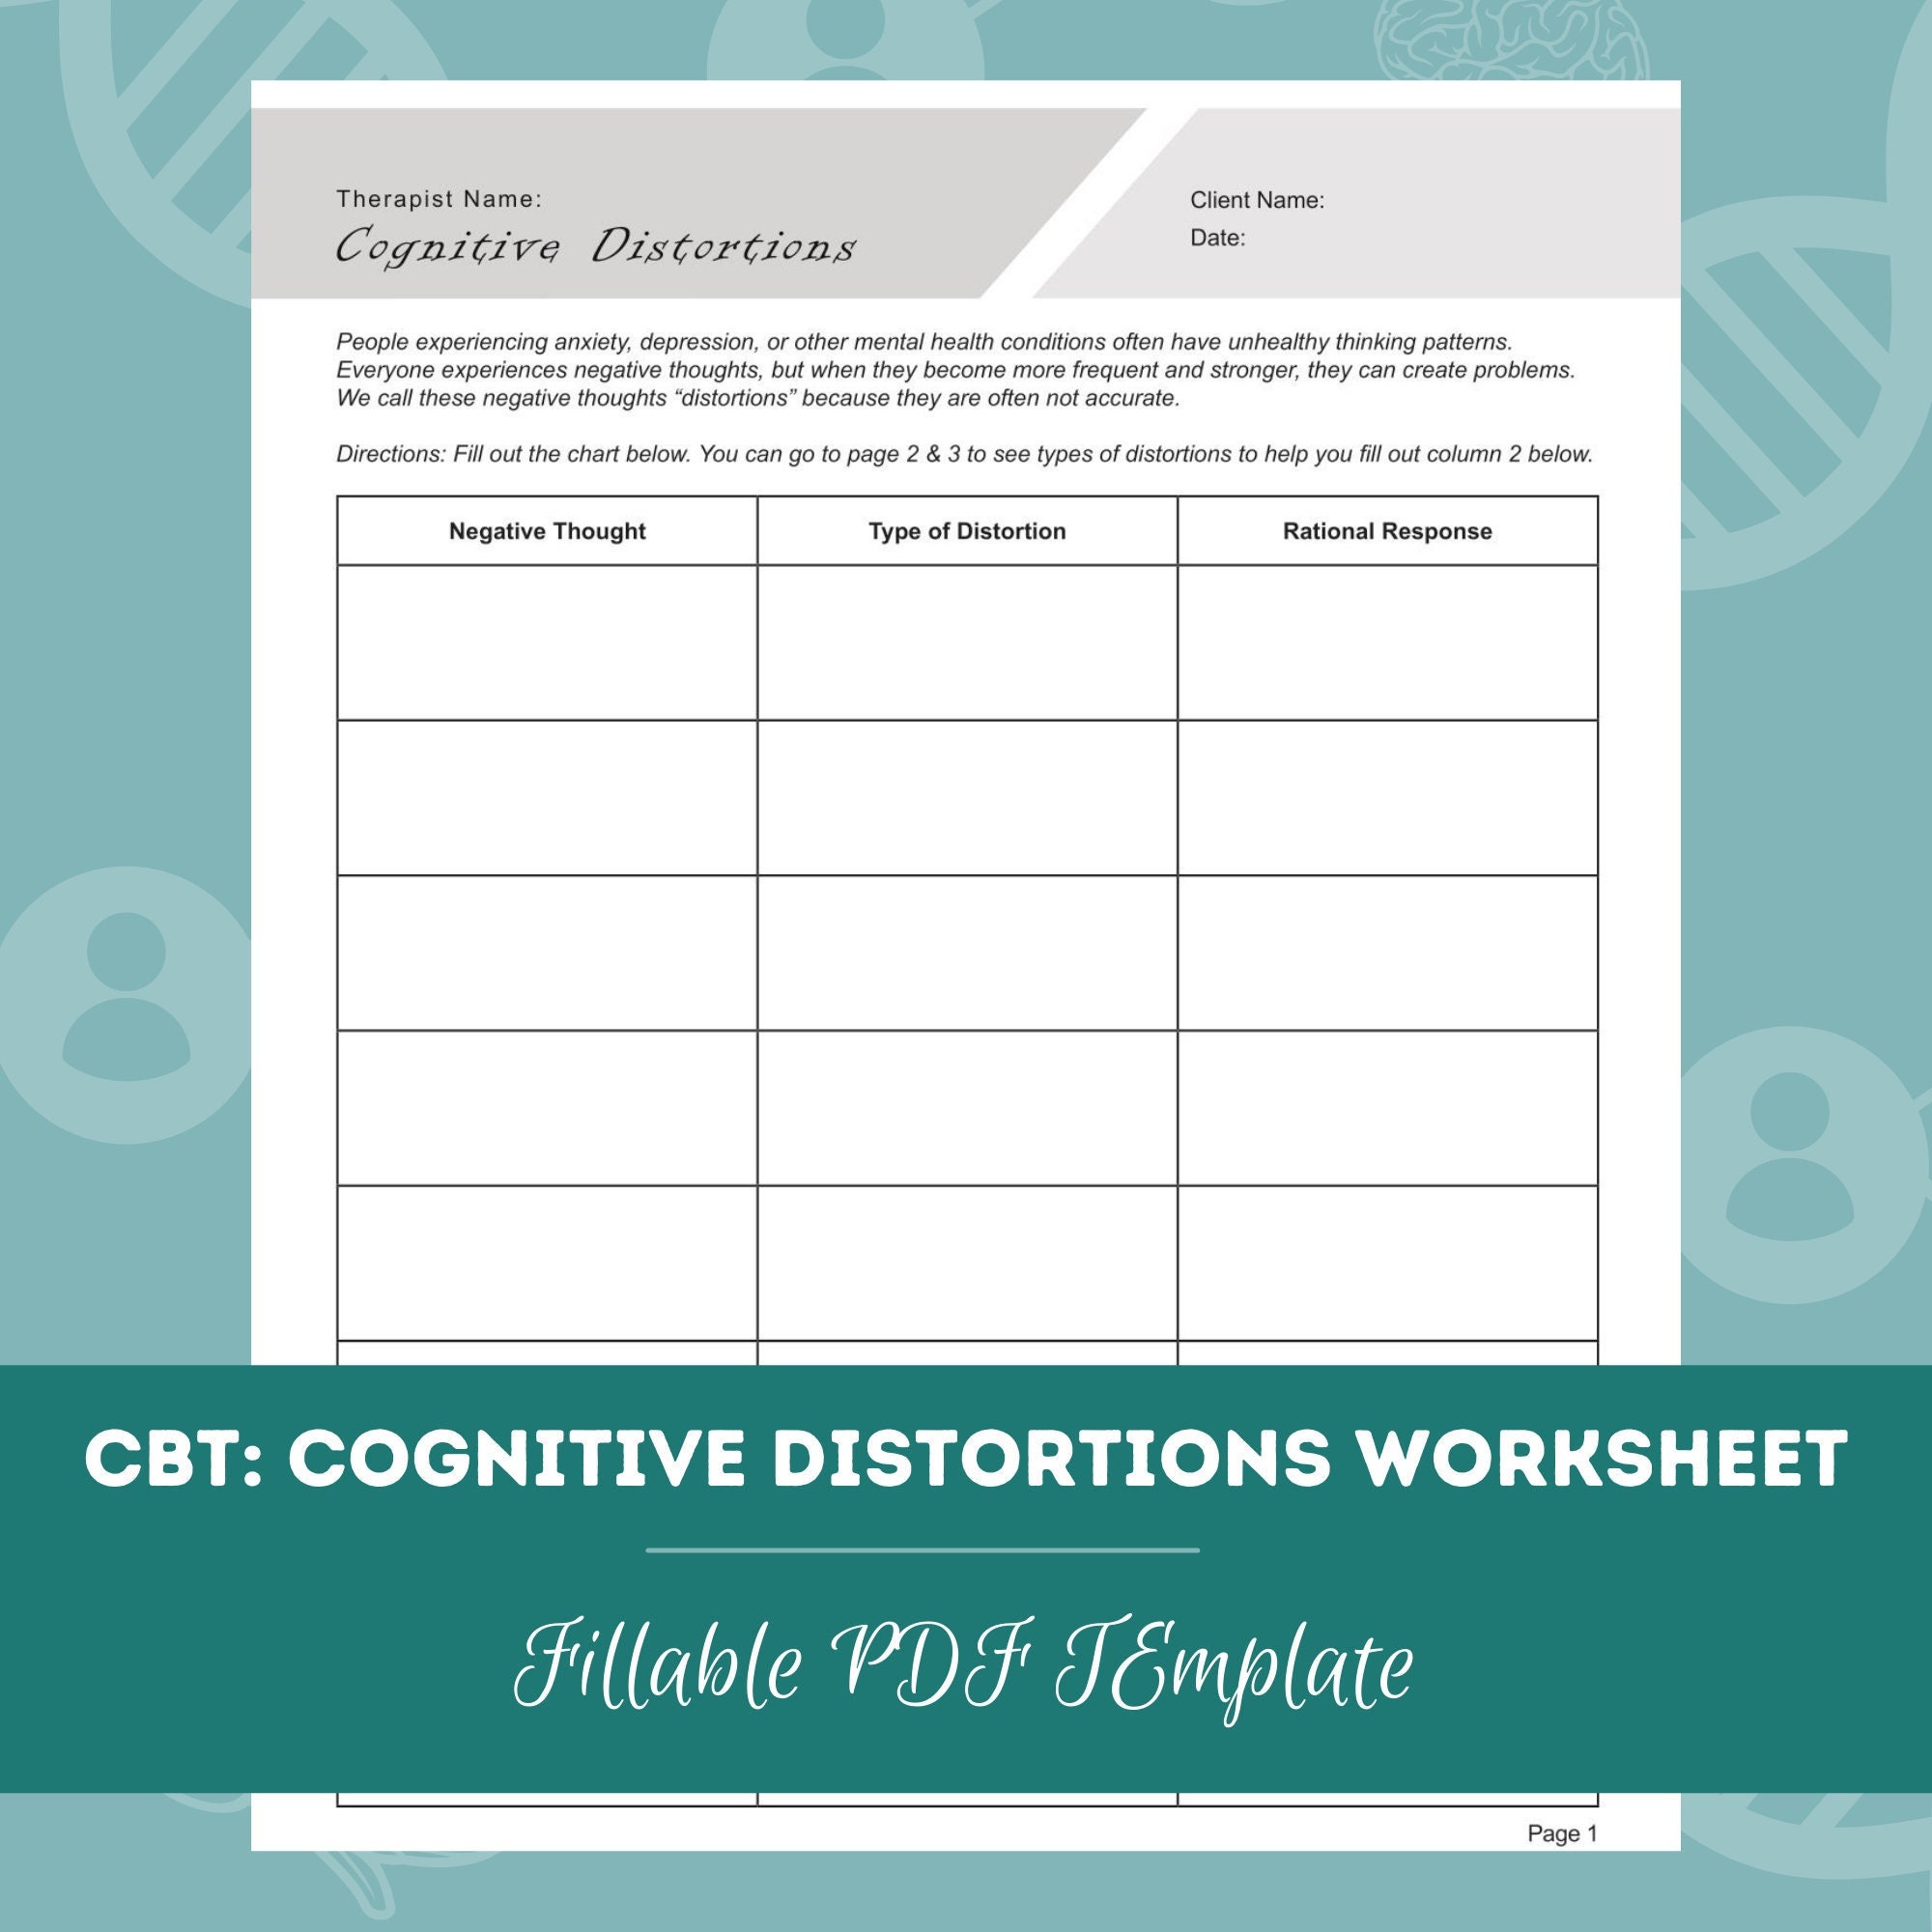 cbt-cognitive-distortions-worksheet-editable-fillable-pdf-etsy